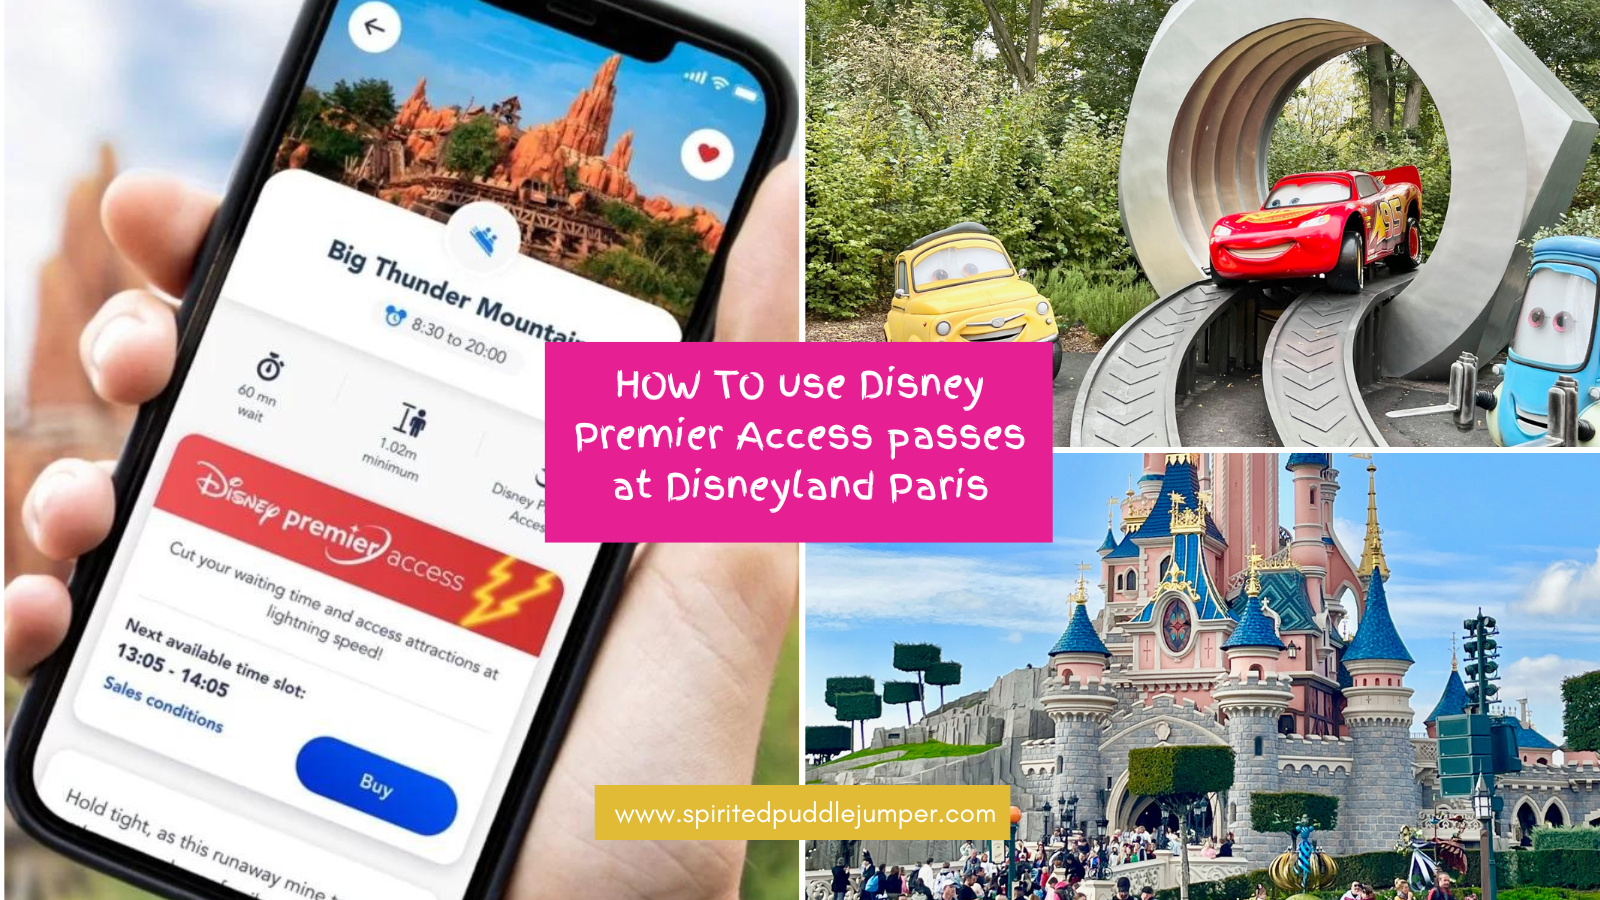 Disney Premier Access Ultimate